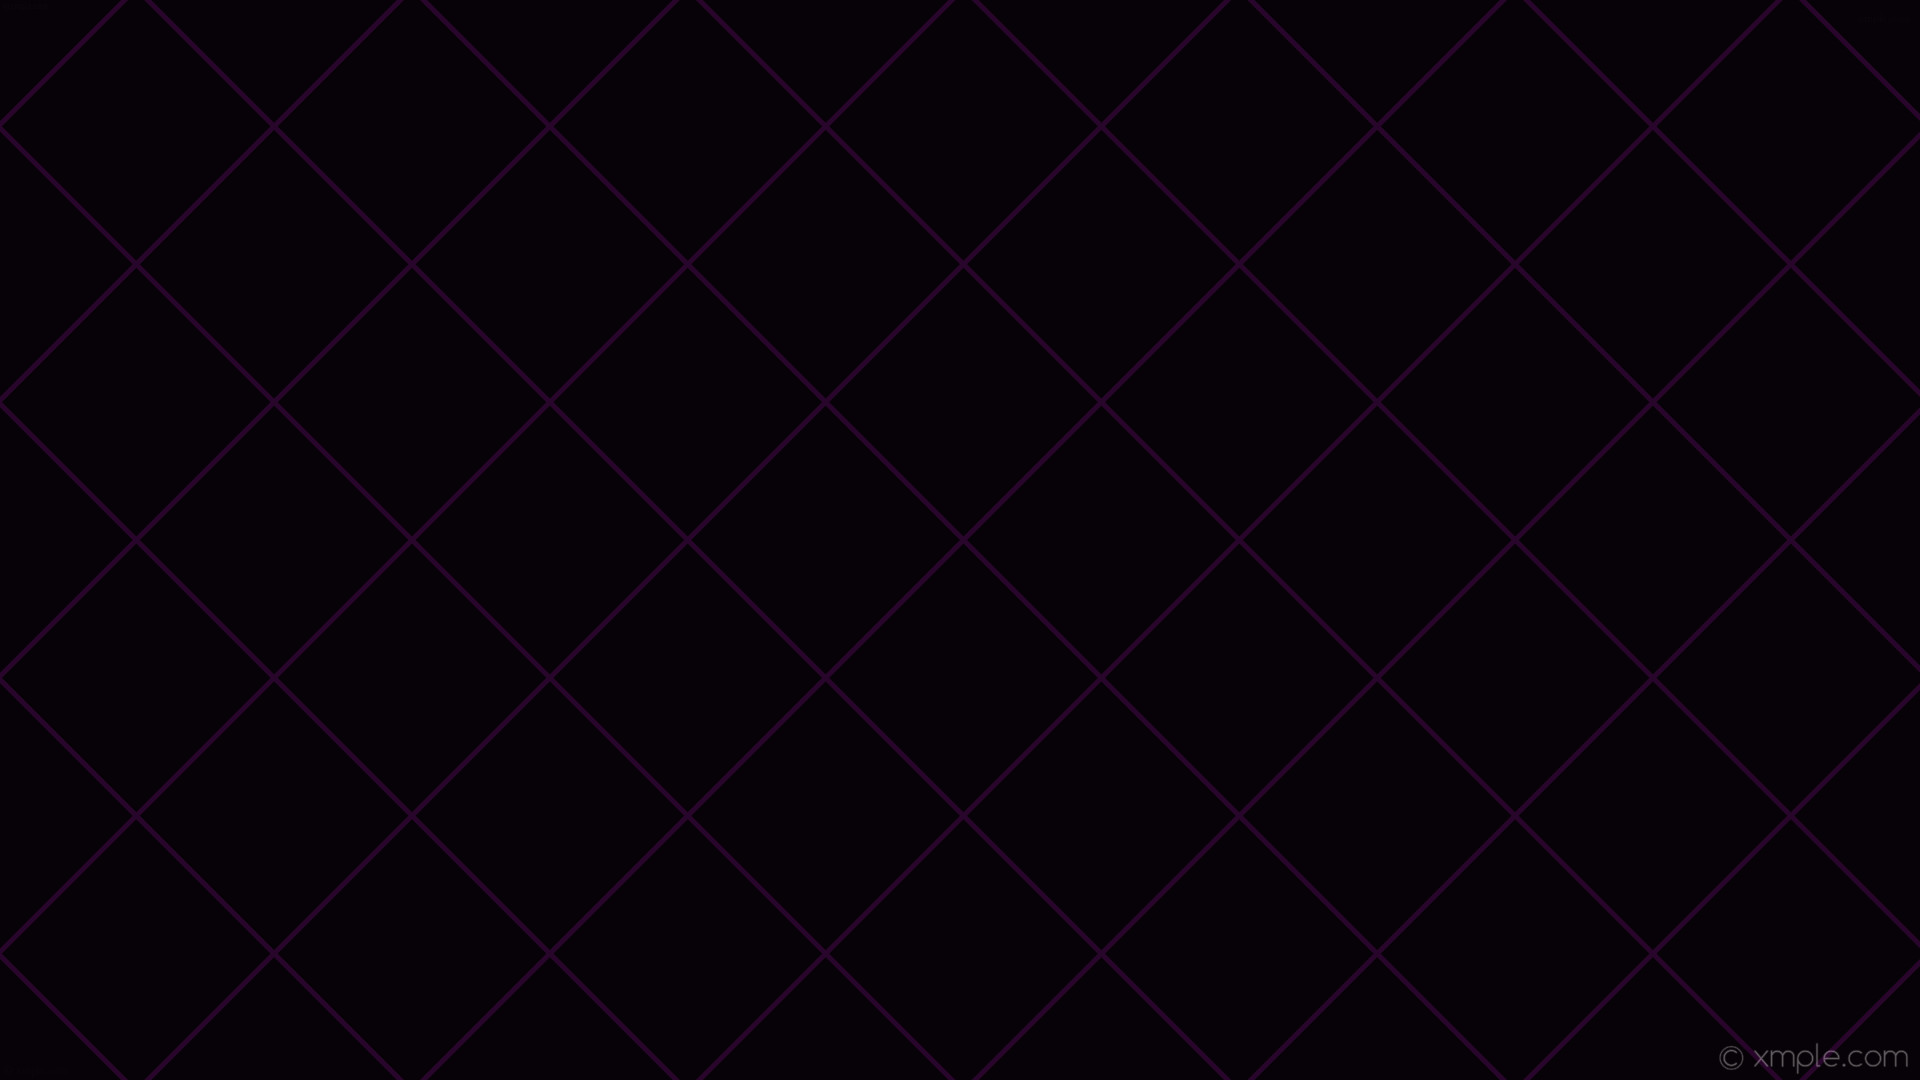 1920x1080 wallpaper grid magenta graph paper black dark magenta #070207 #36073a 45Â°  5px 195px